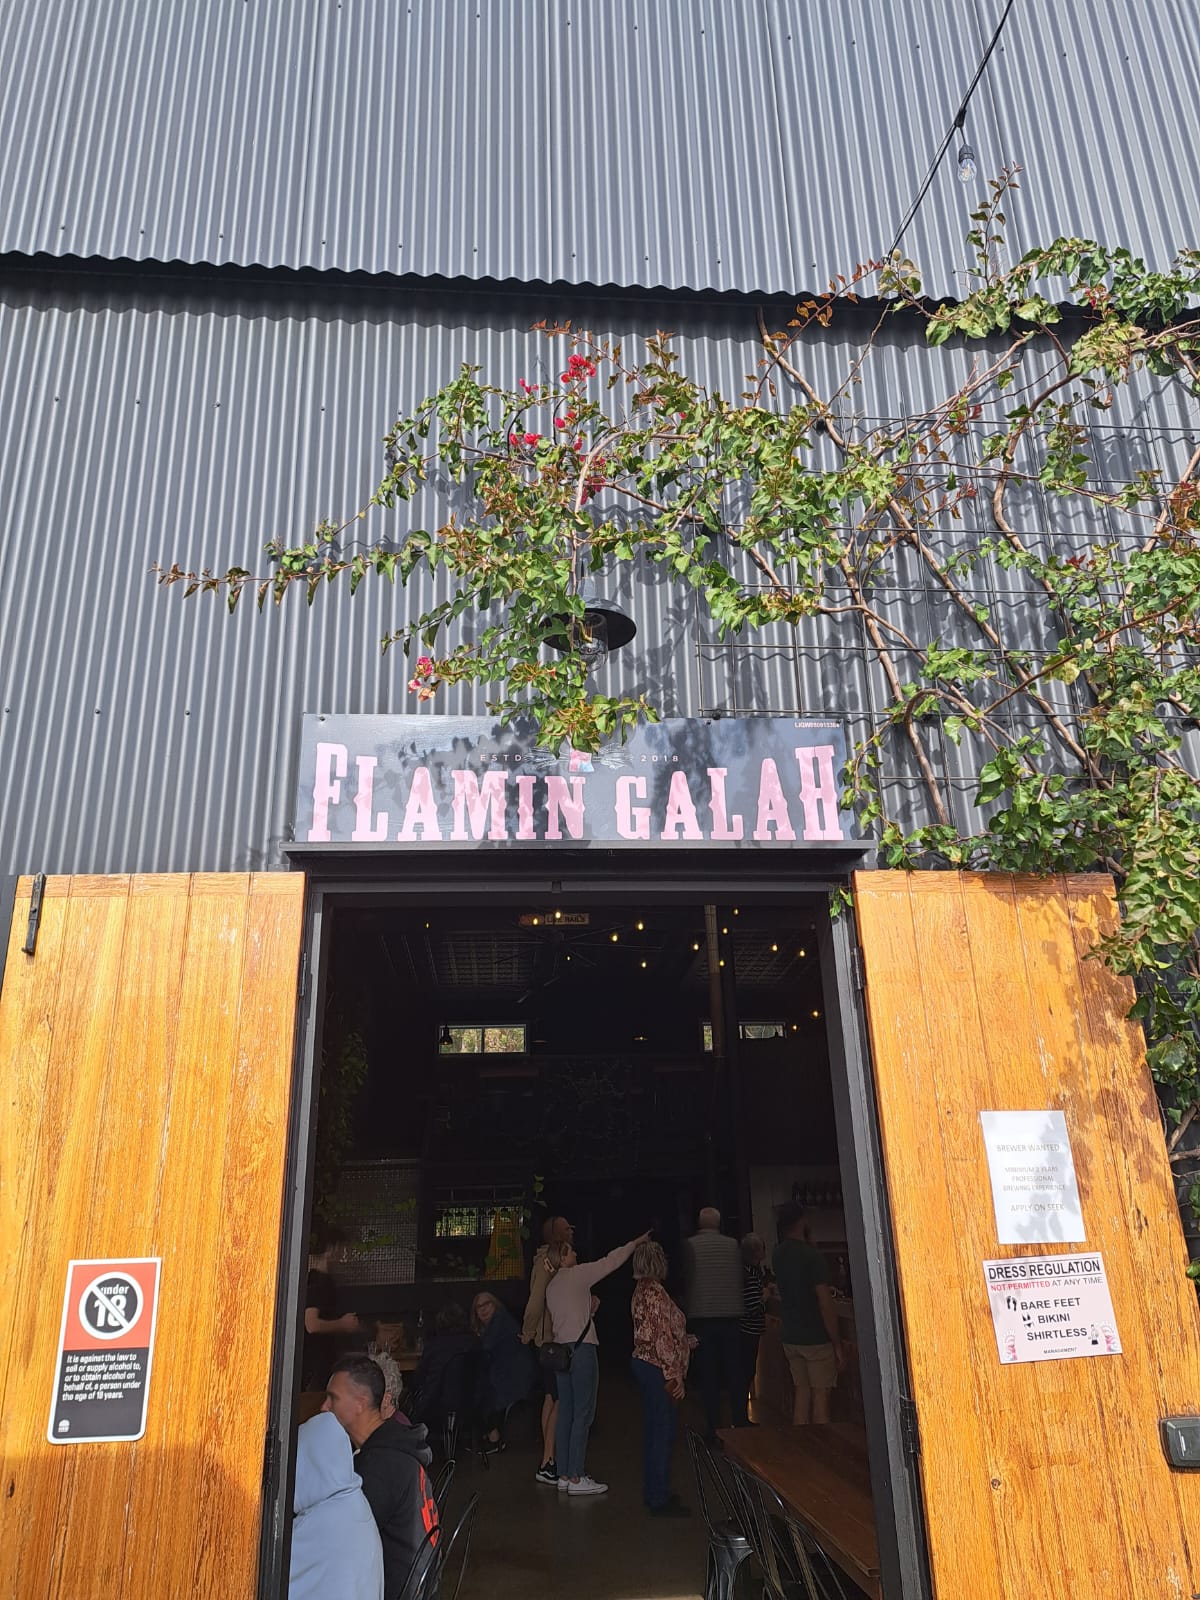 Flamin Galah Brewing Co